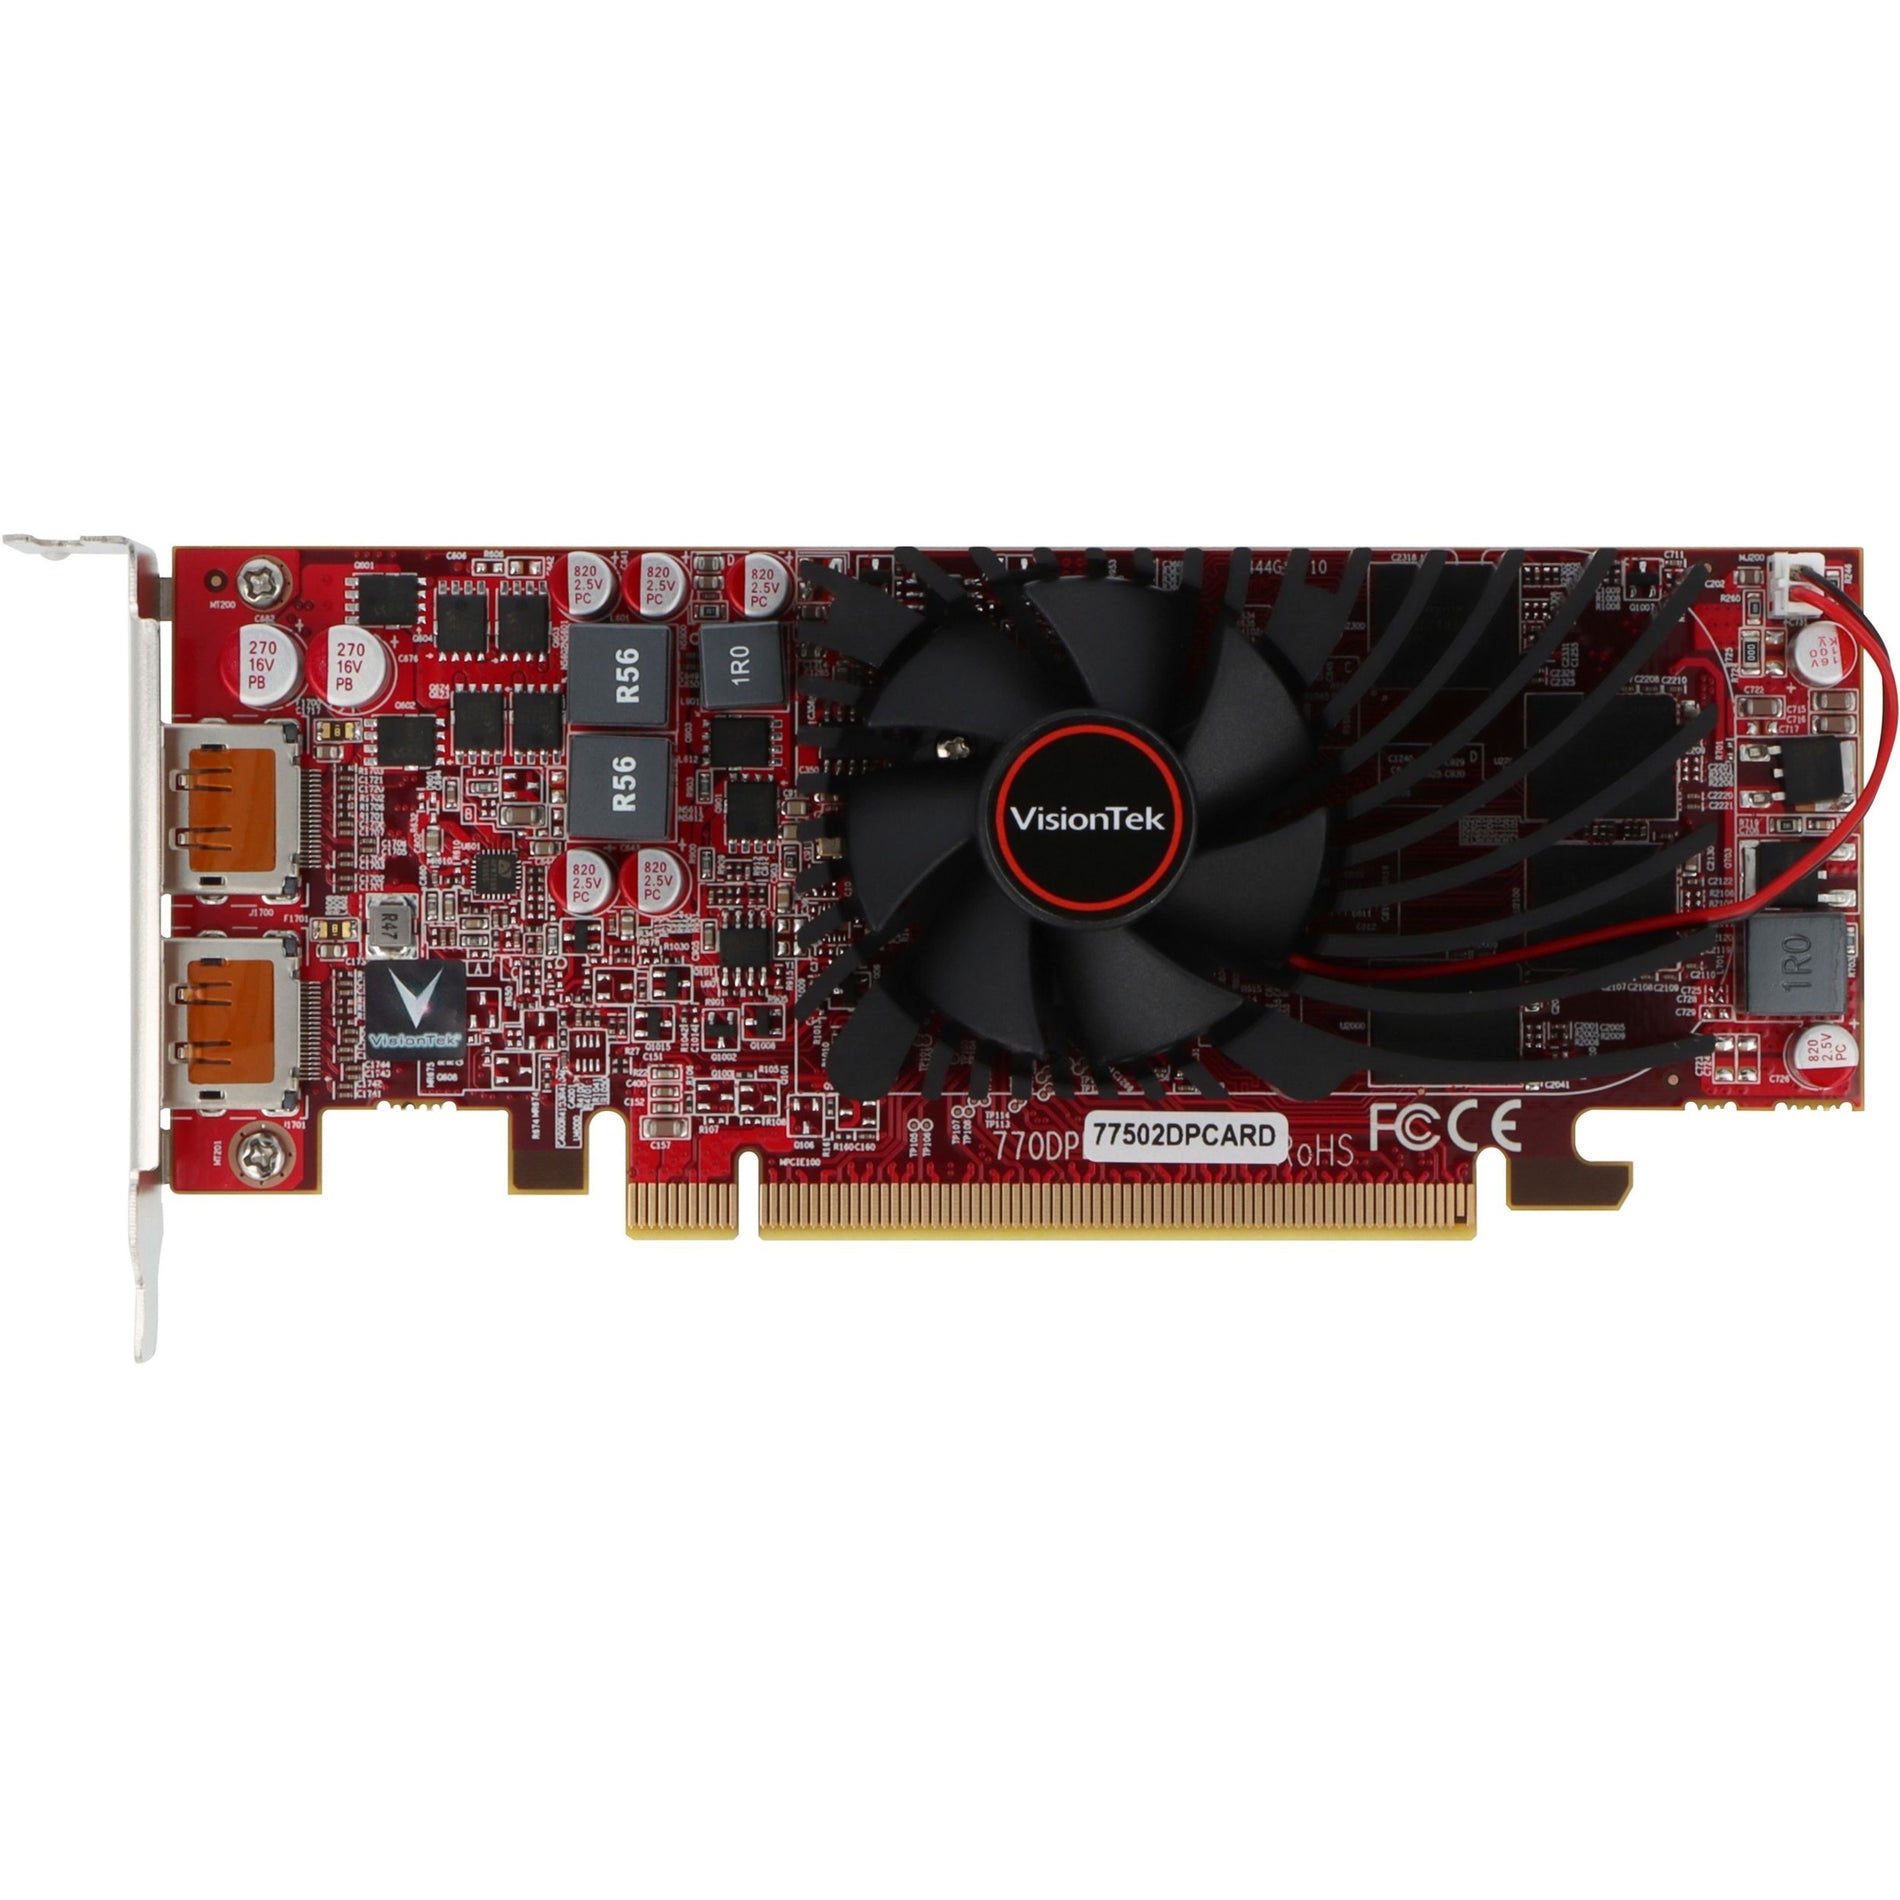 VisionTek 900942 AMD Radeon HD 7750 Graphic Card 2GB GDDR5 3-Year Warranty ビジョンテック 900942 AMD レイディオン HD 7750 グラフィックカード、2GB GDDR5、3年保証